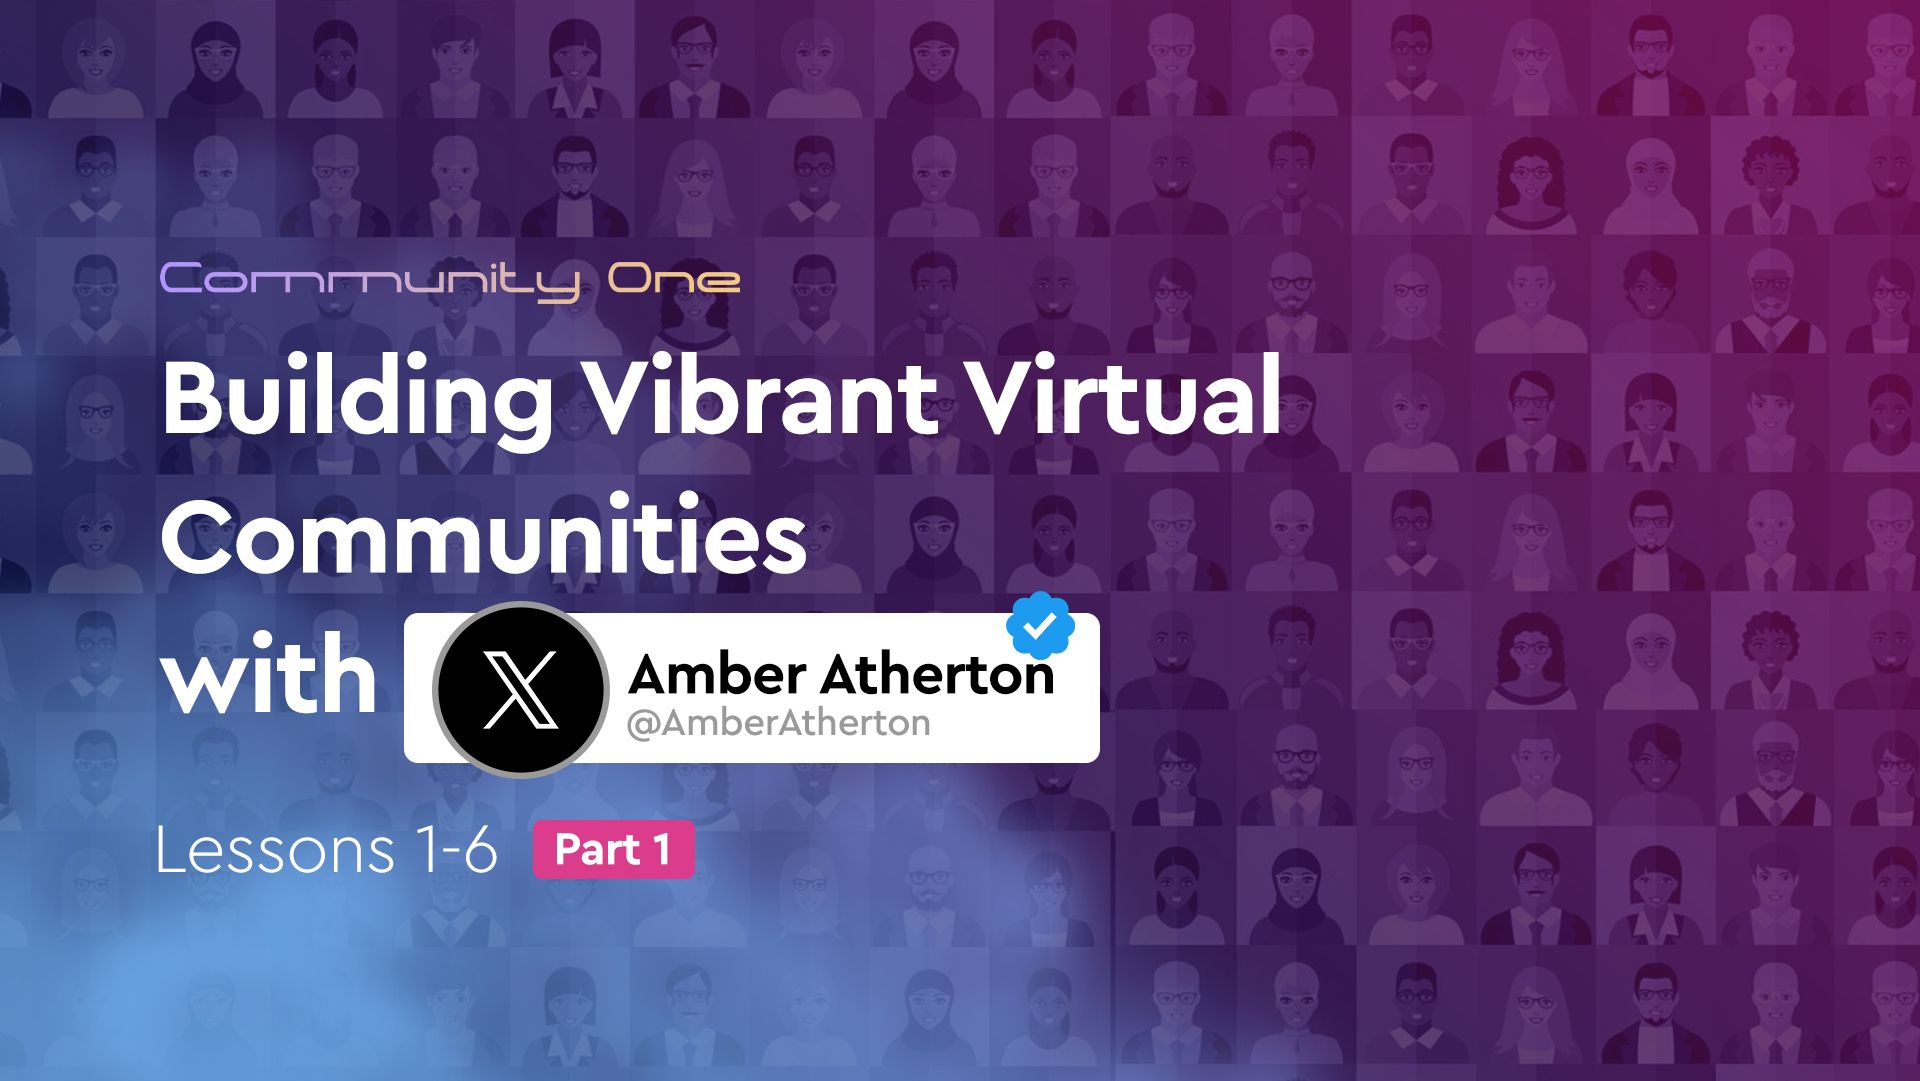 Amber Atherton Unveils: Crafting Engaging Virtual Communities - Tips 1-6 [Part 1]